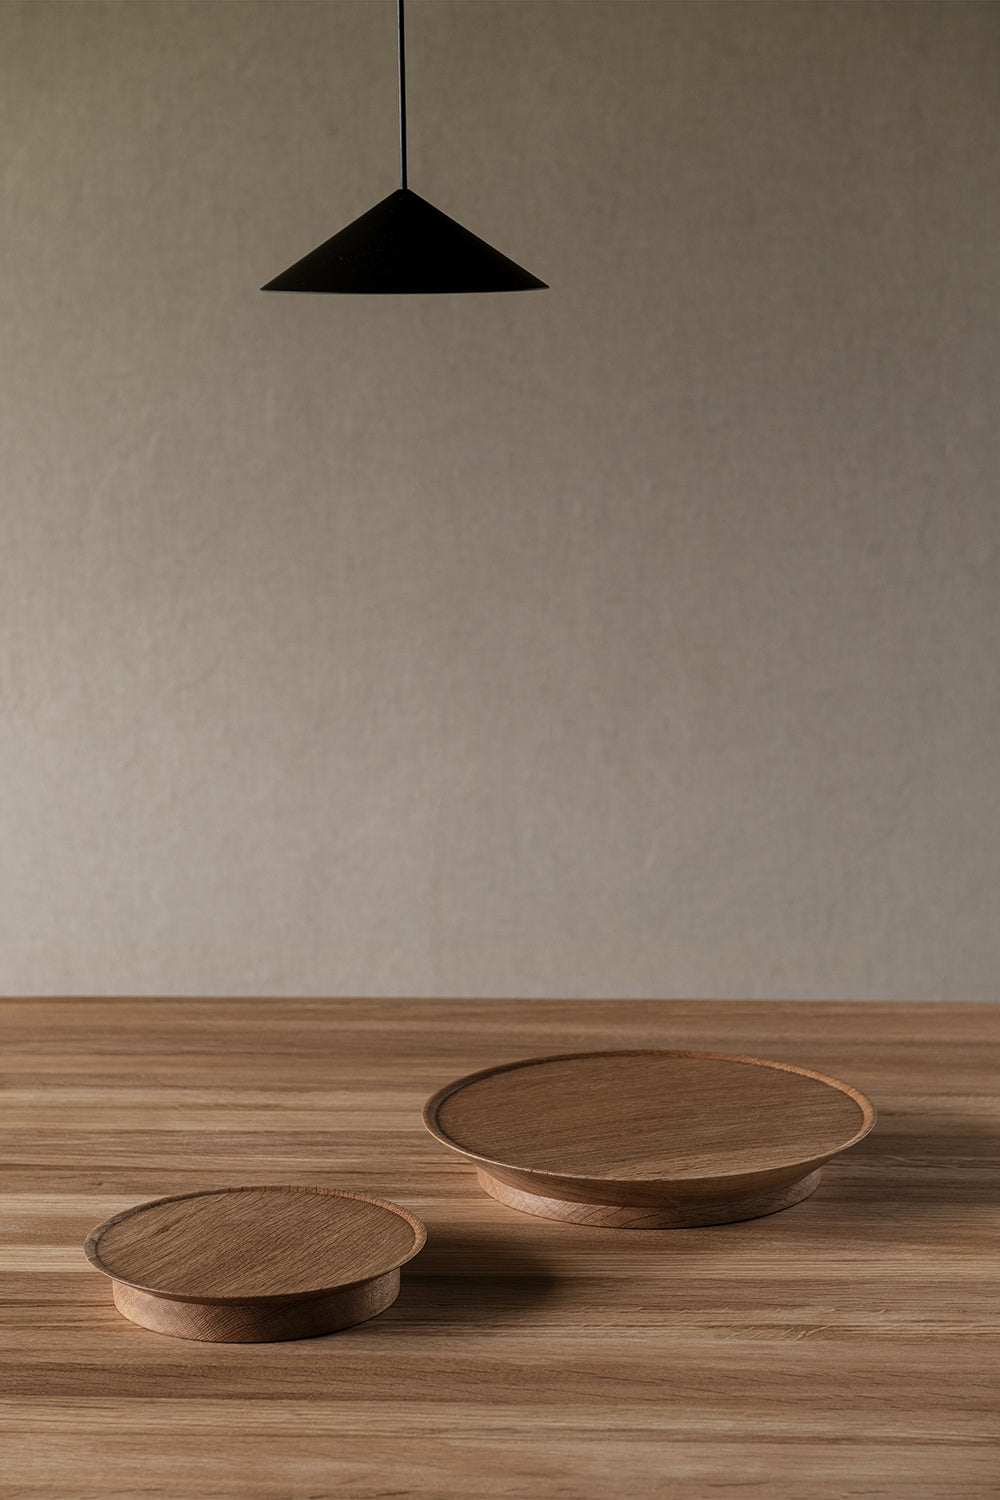 Oak Platter by Bonni Bonne, Japanese style wooden plates set on wooden table